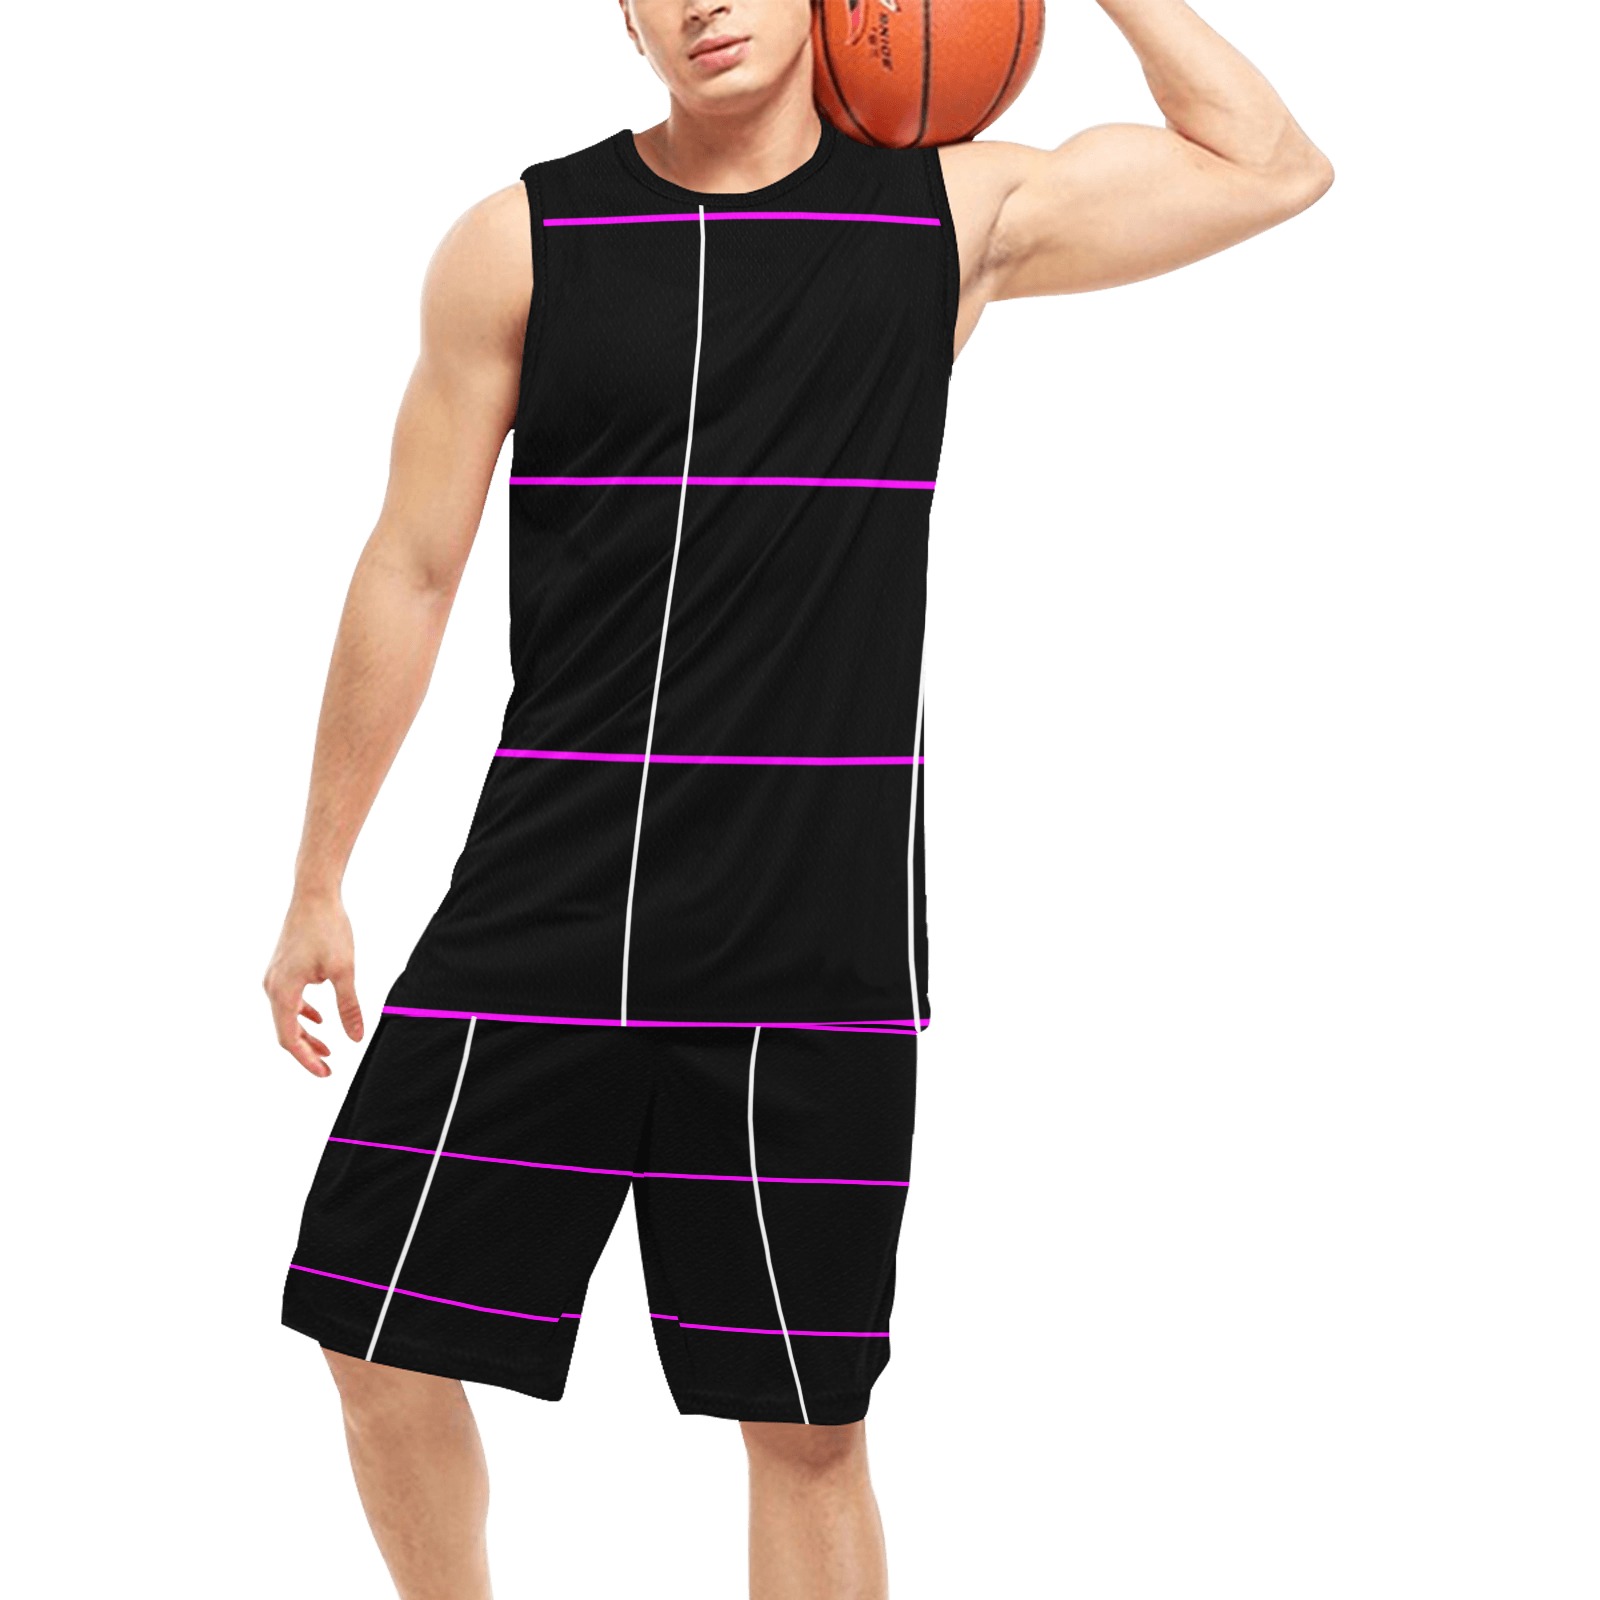 imgonline-com-ua-tile-HTRAInafsxVTwFk Basketball Uniform with Pocket